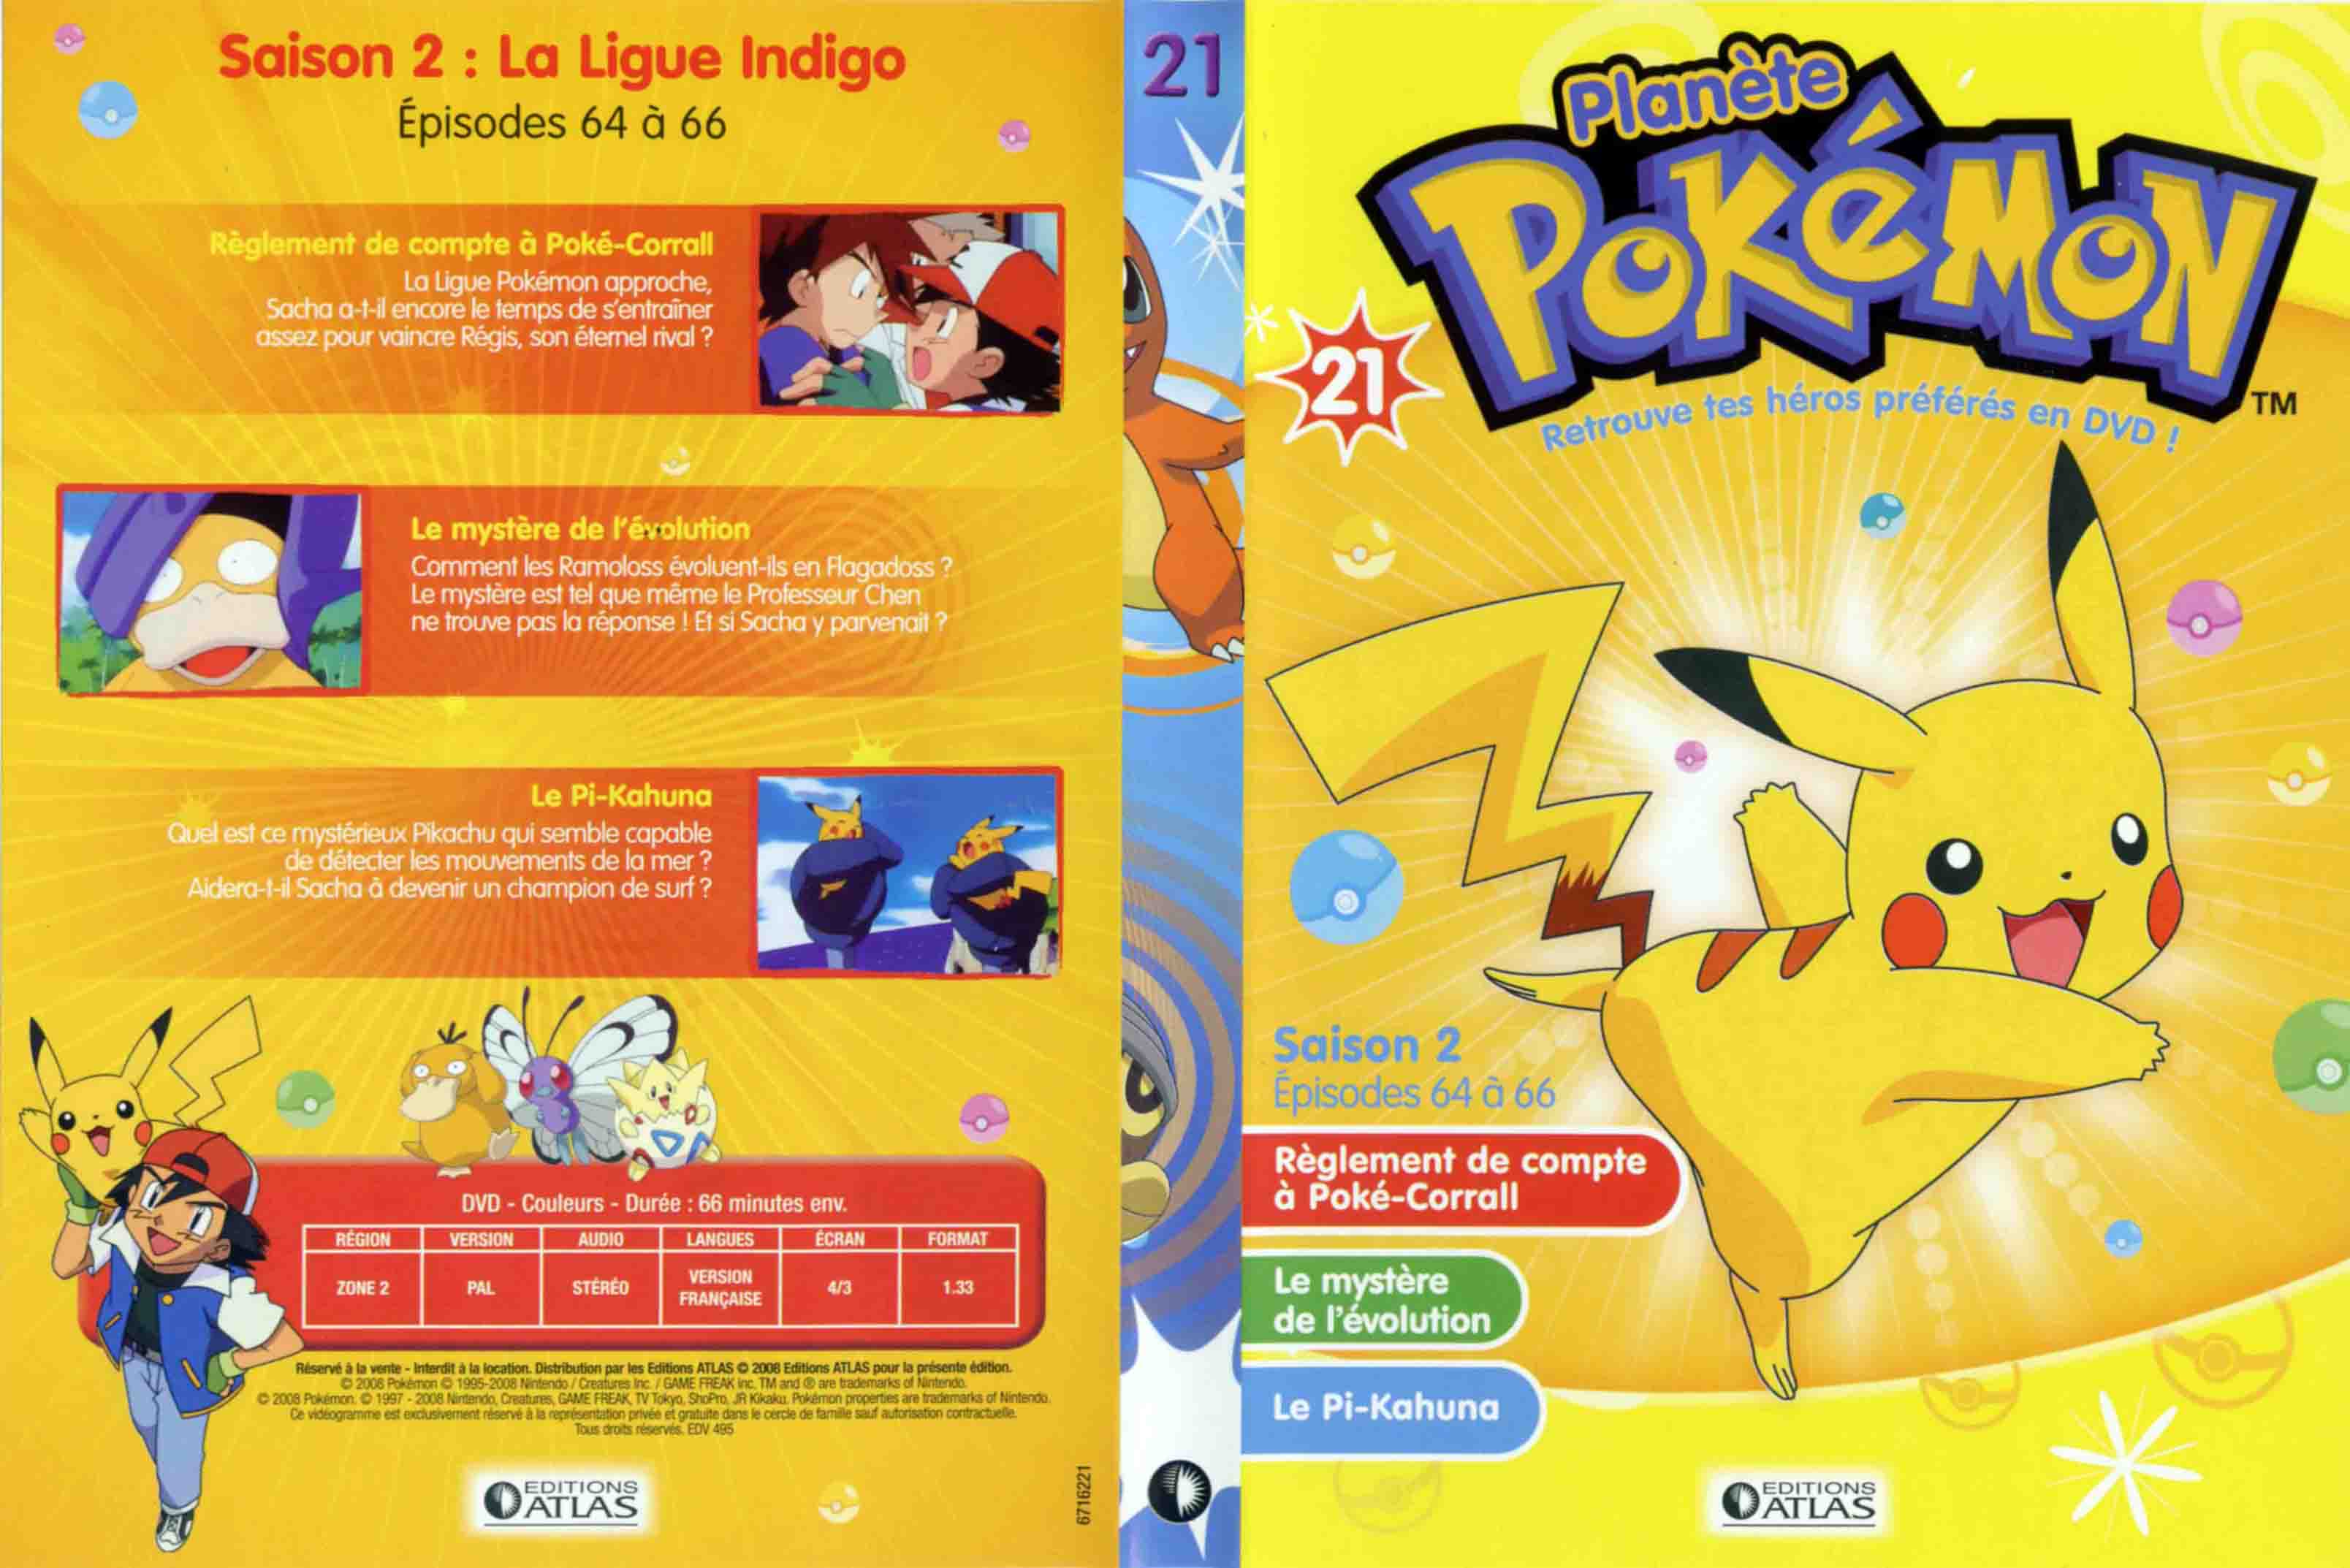 Jaquette DVD Planete Pokemon vol 21